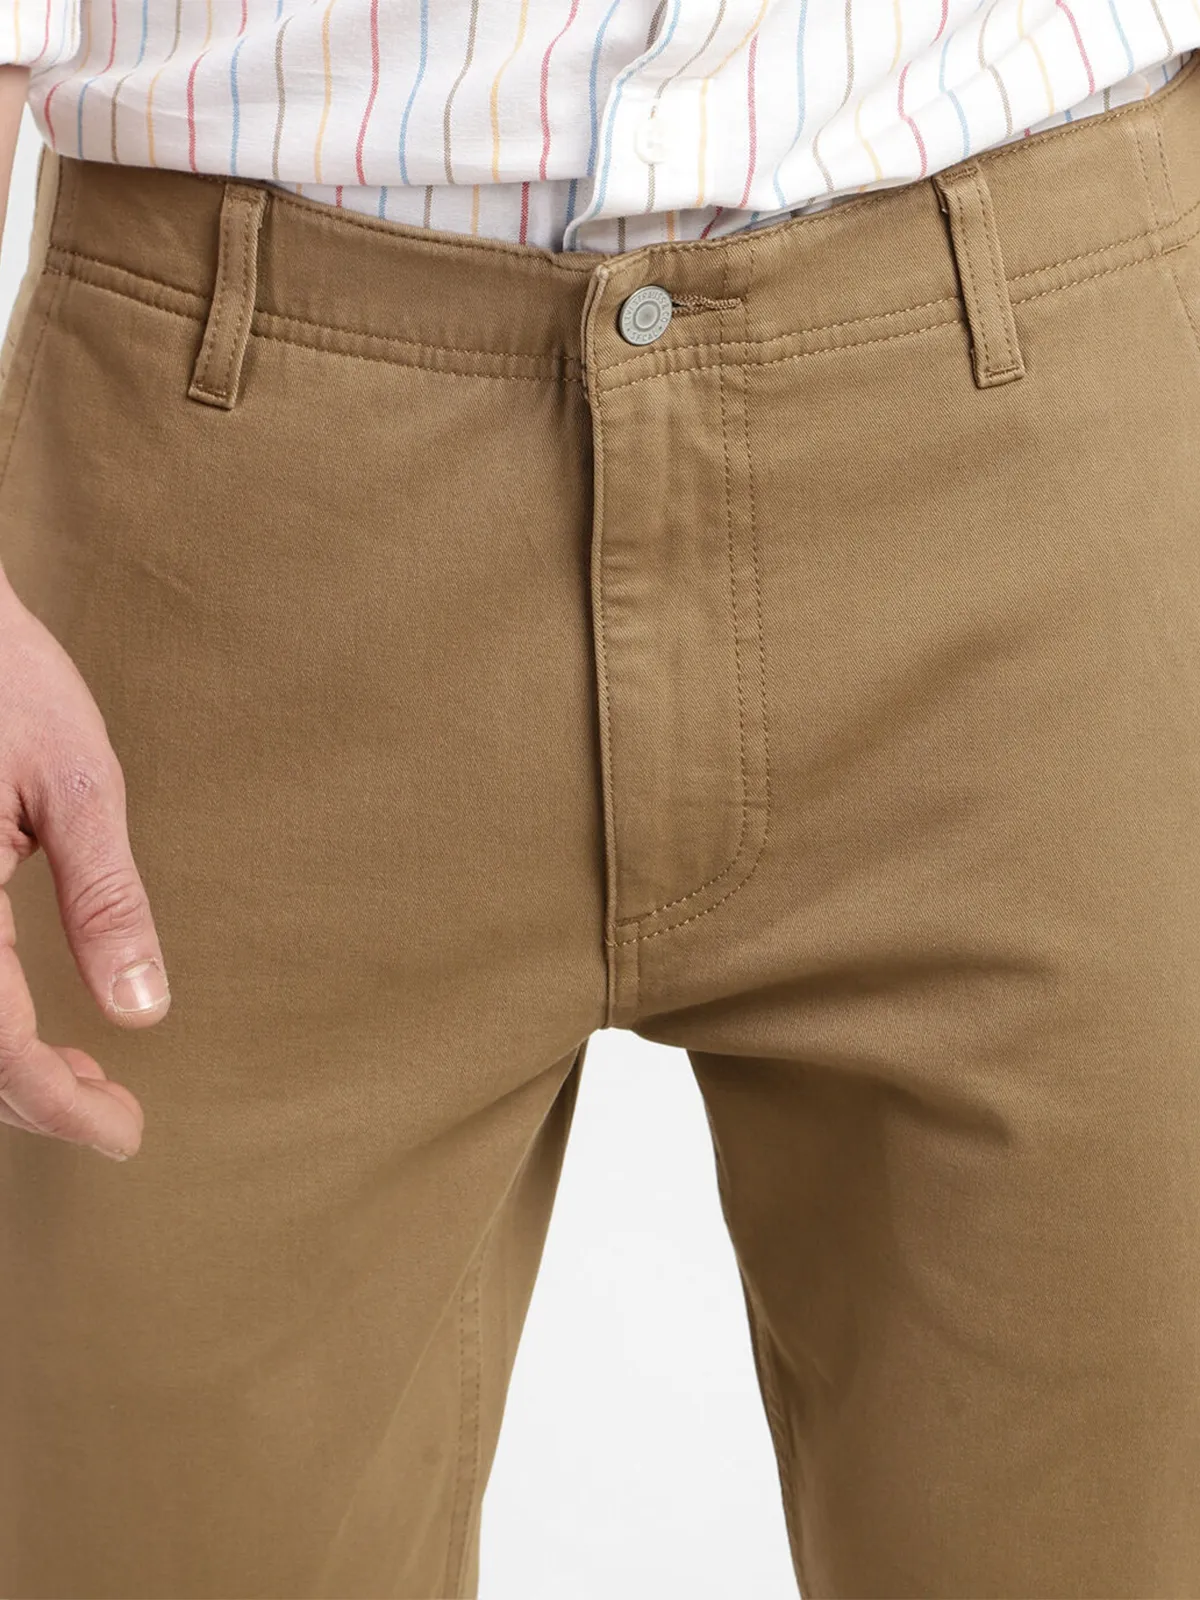 Levis khaki 512 slim taper cotton trouser